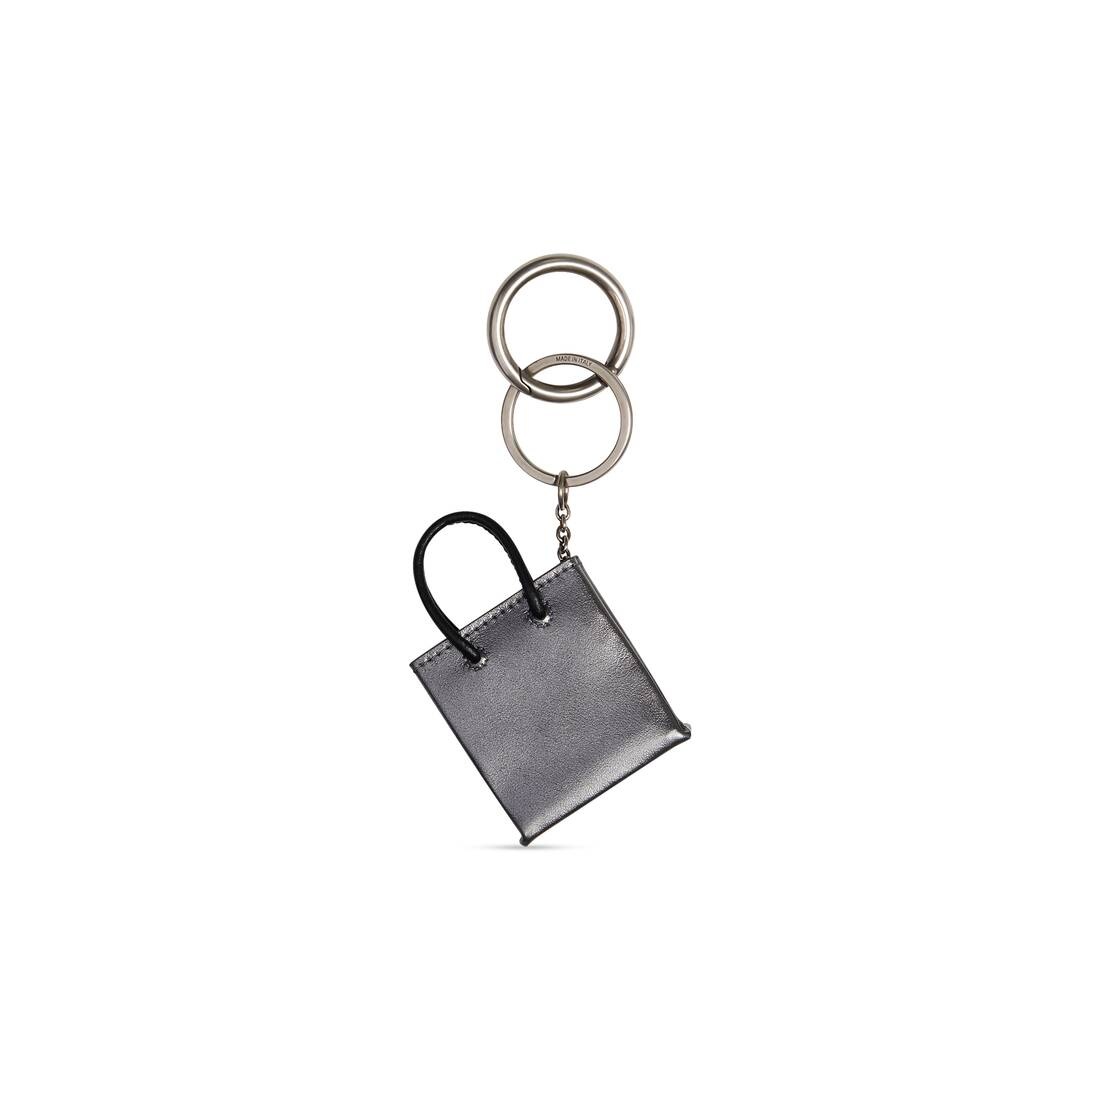 Mini Shopping Keychain in Silver - 2